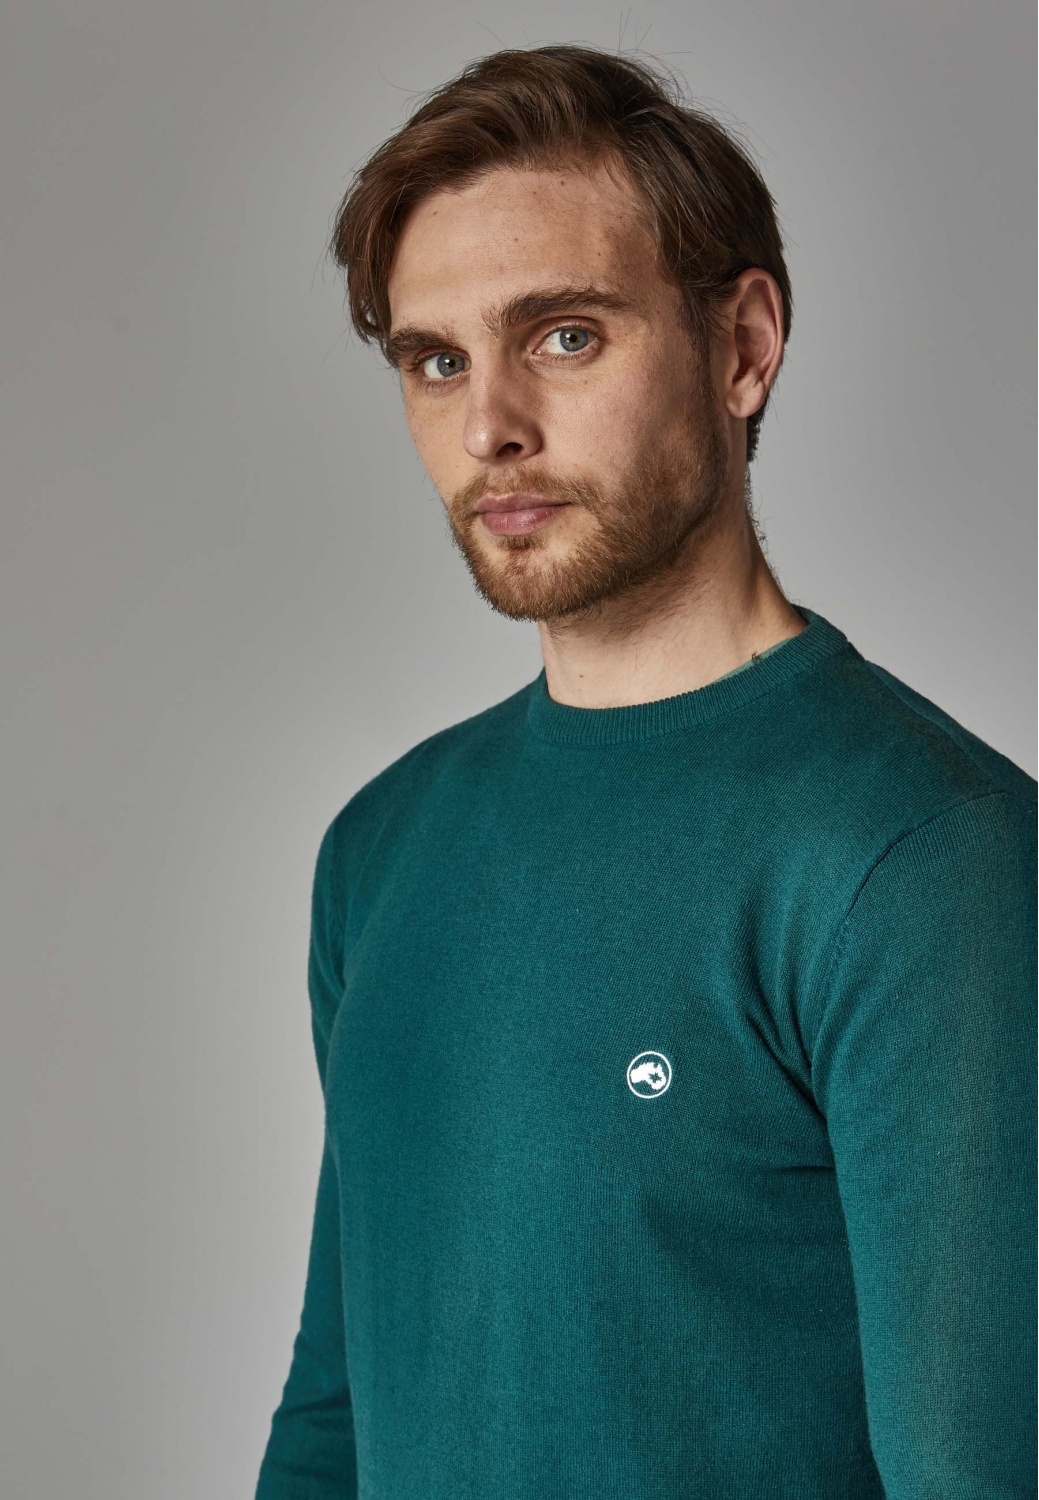 Men's pullover in green colour with round neck Altonadock